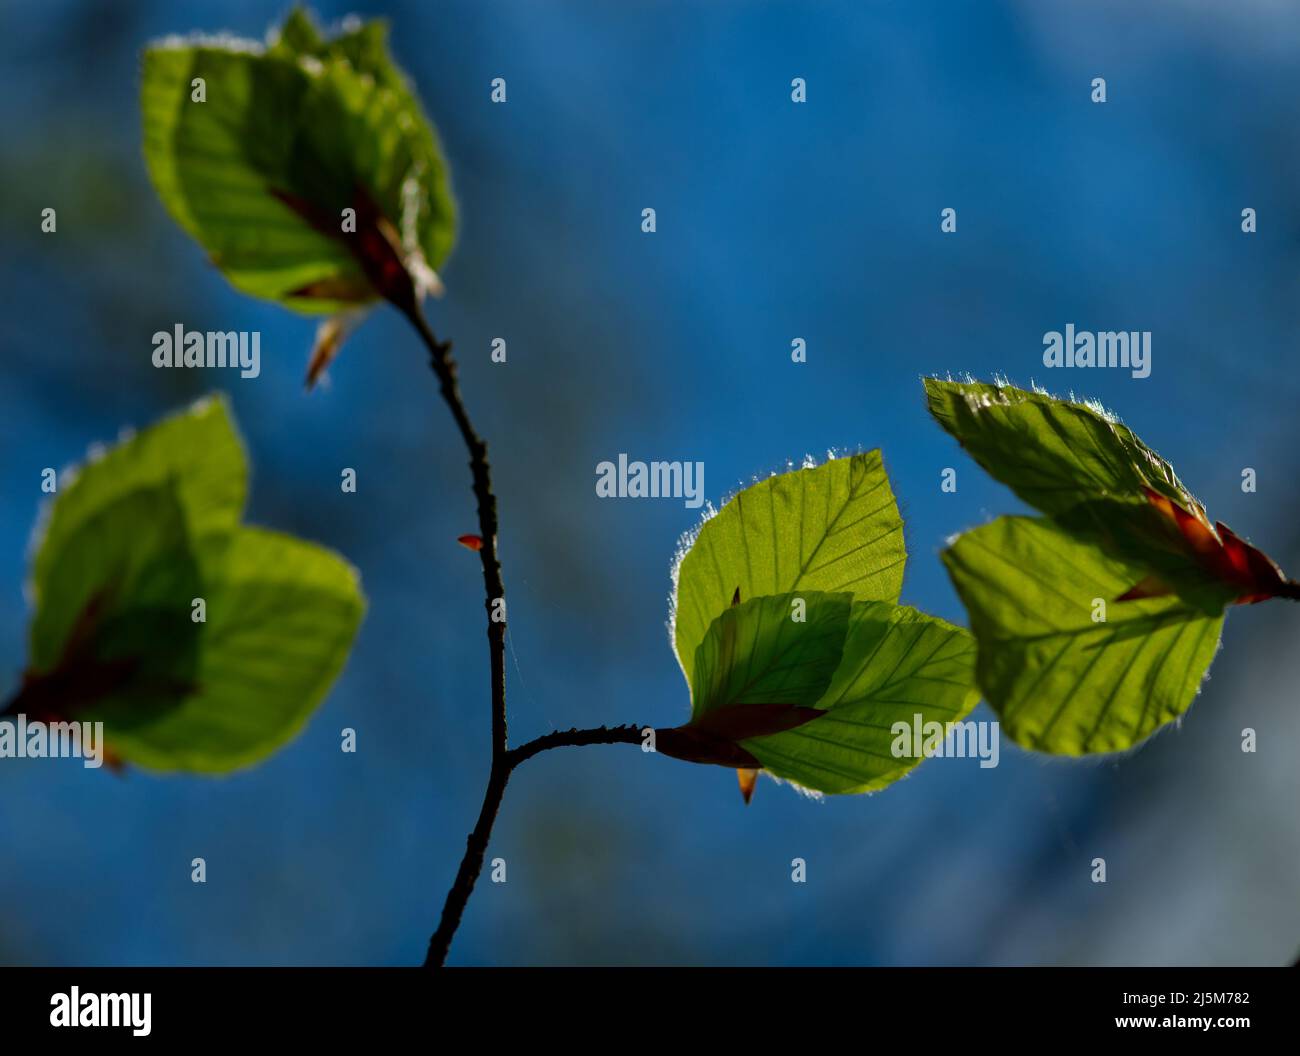 closeup view of fresh and luminous green leaves of the European hornbeam (Carpinus betulus) in blue background Stock Photo